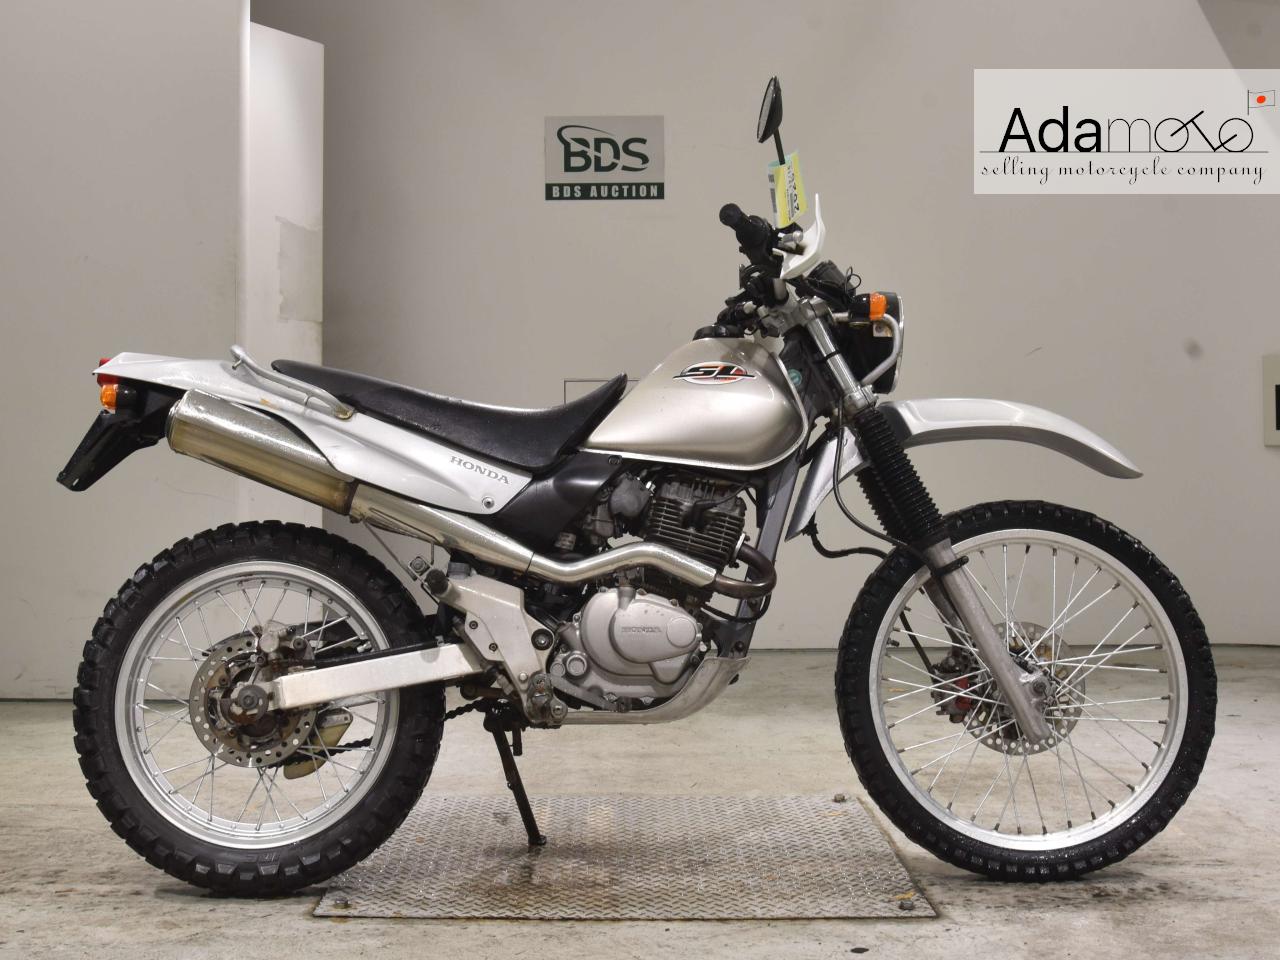 Honda SL230 - Adamoto - Motorcycles from Japan